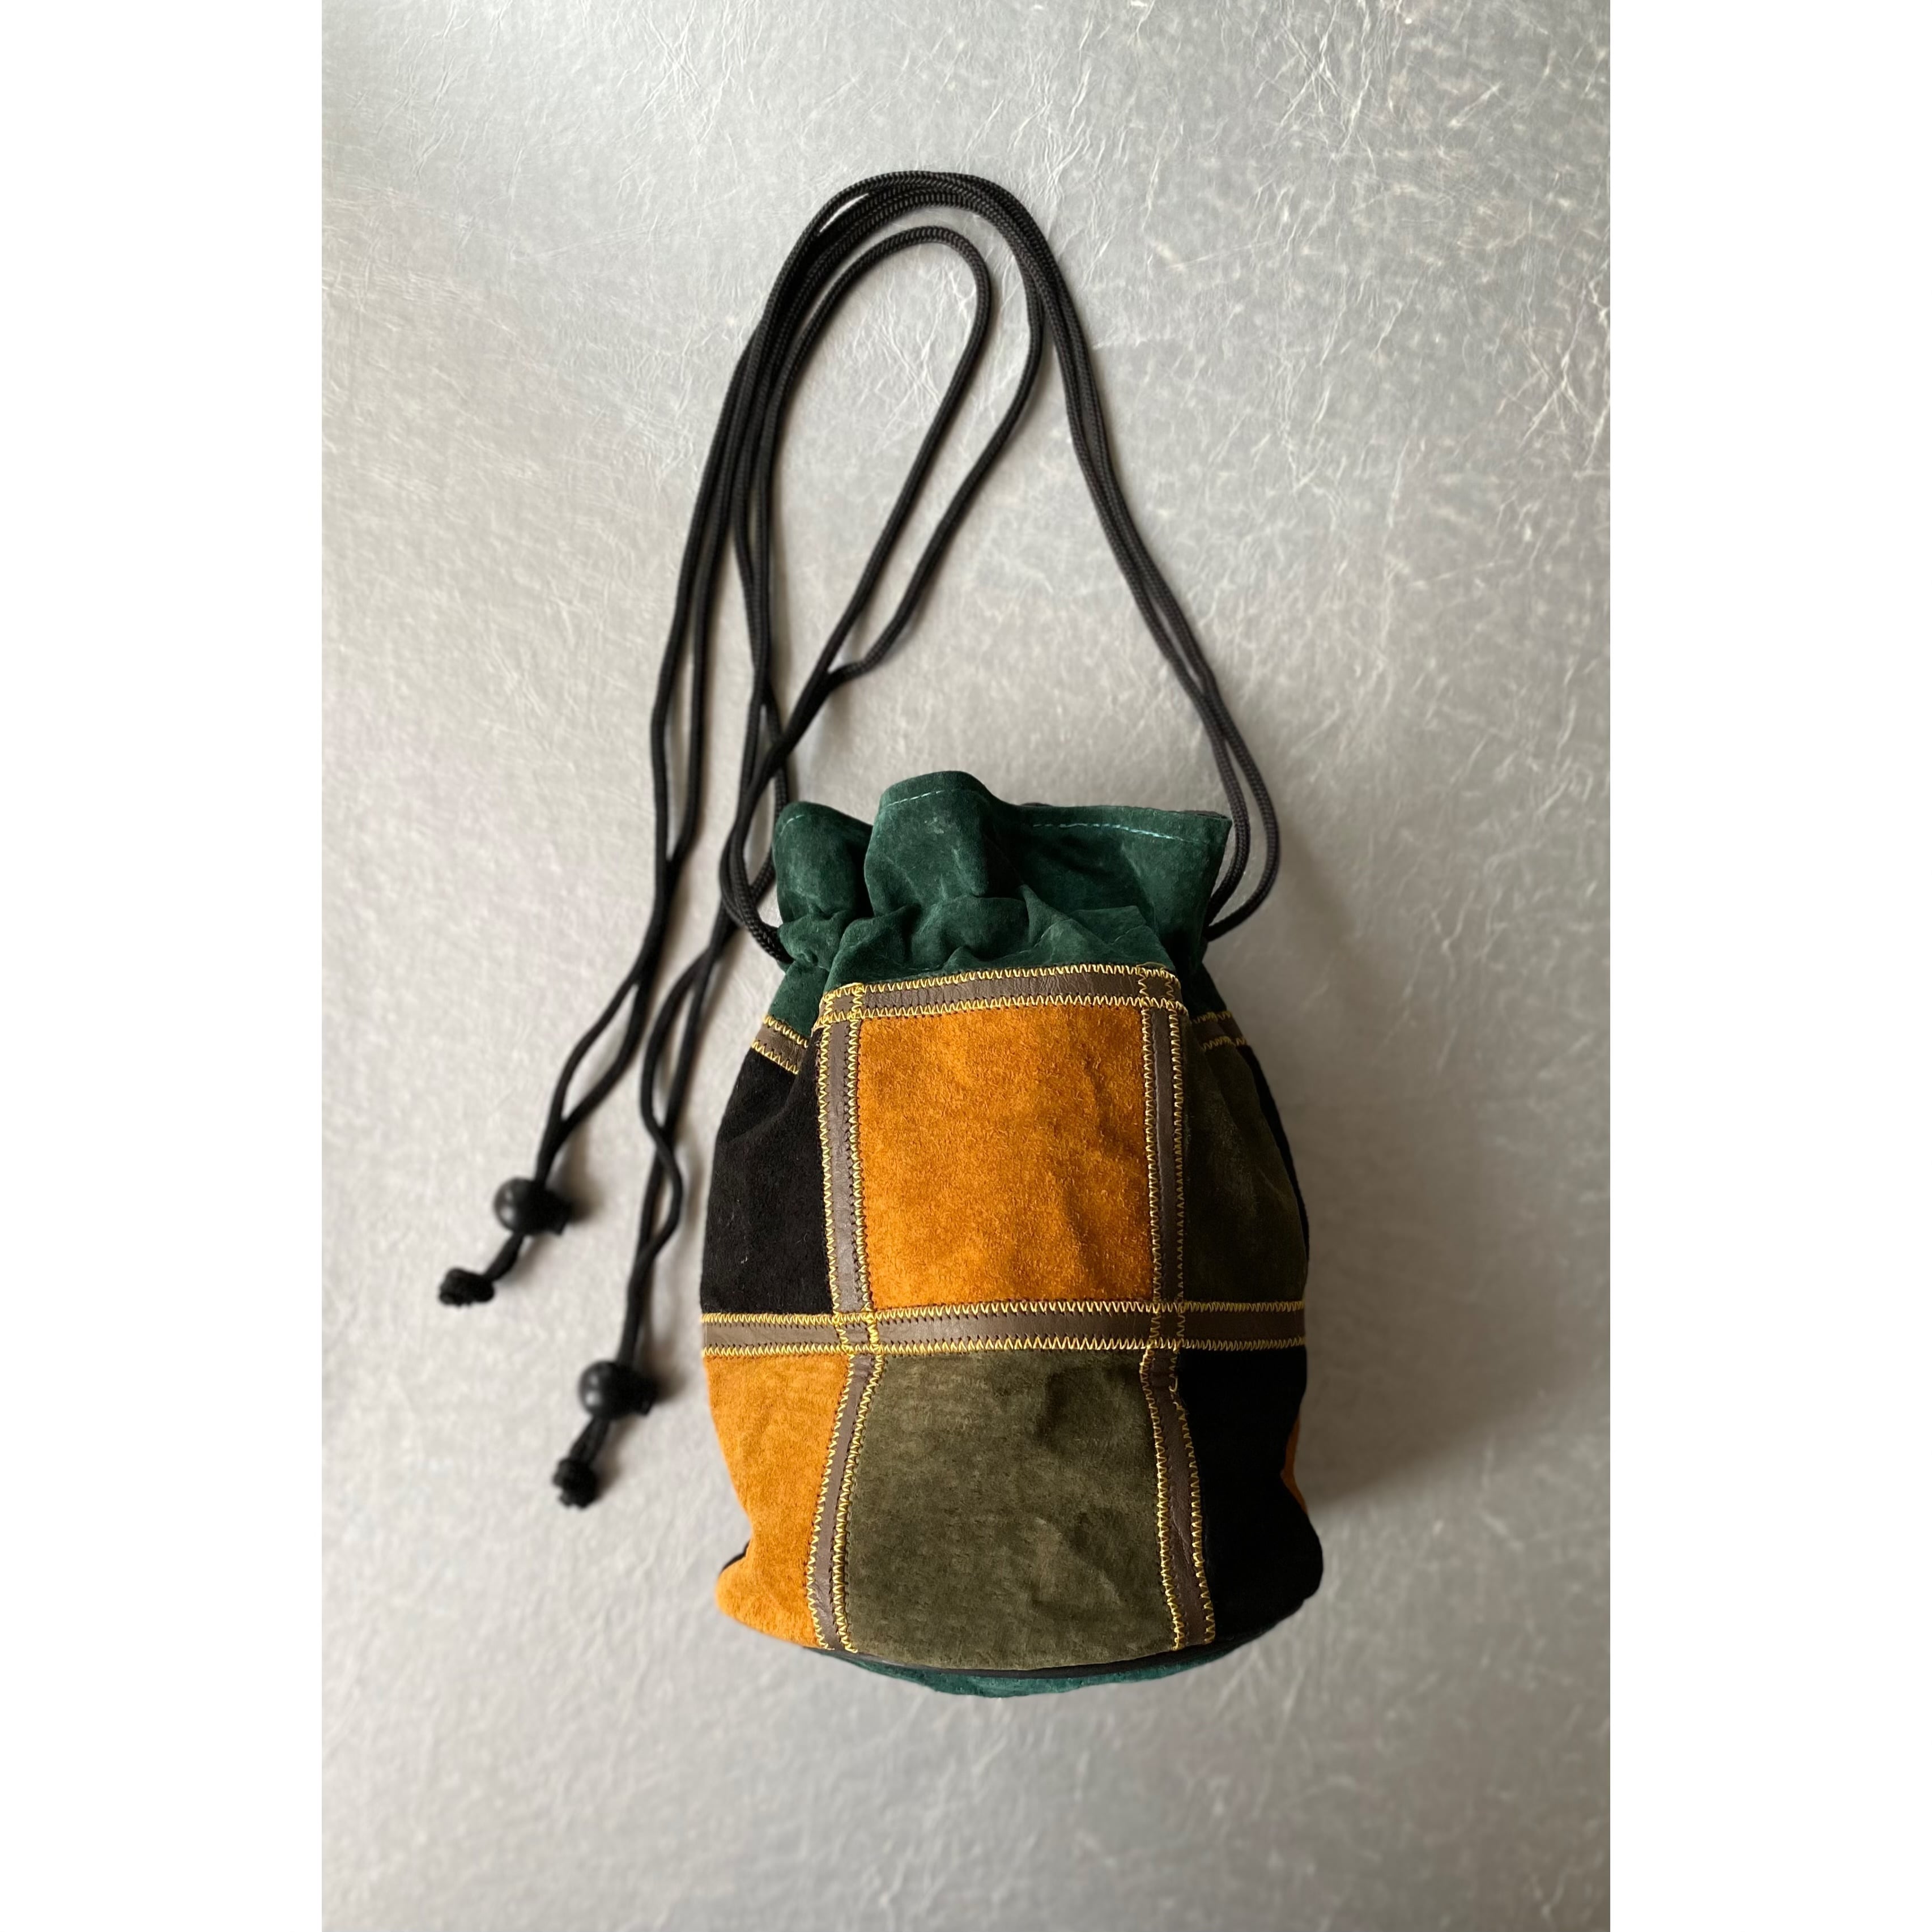 Used retro leather patchwork bag レトロ ユーズド 本革 パッチ